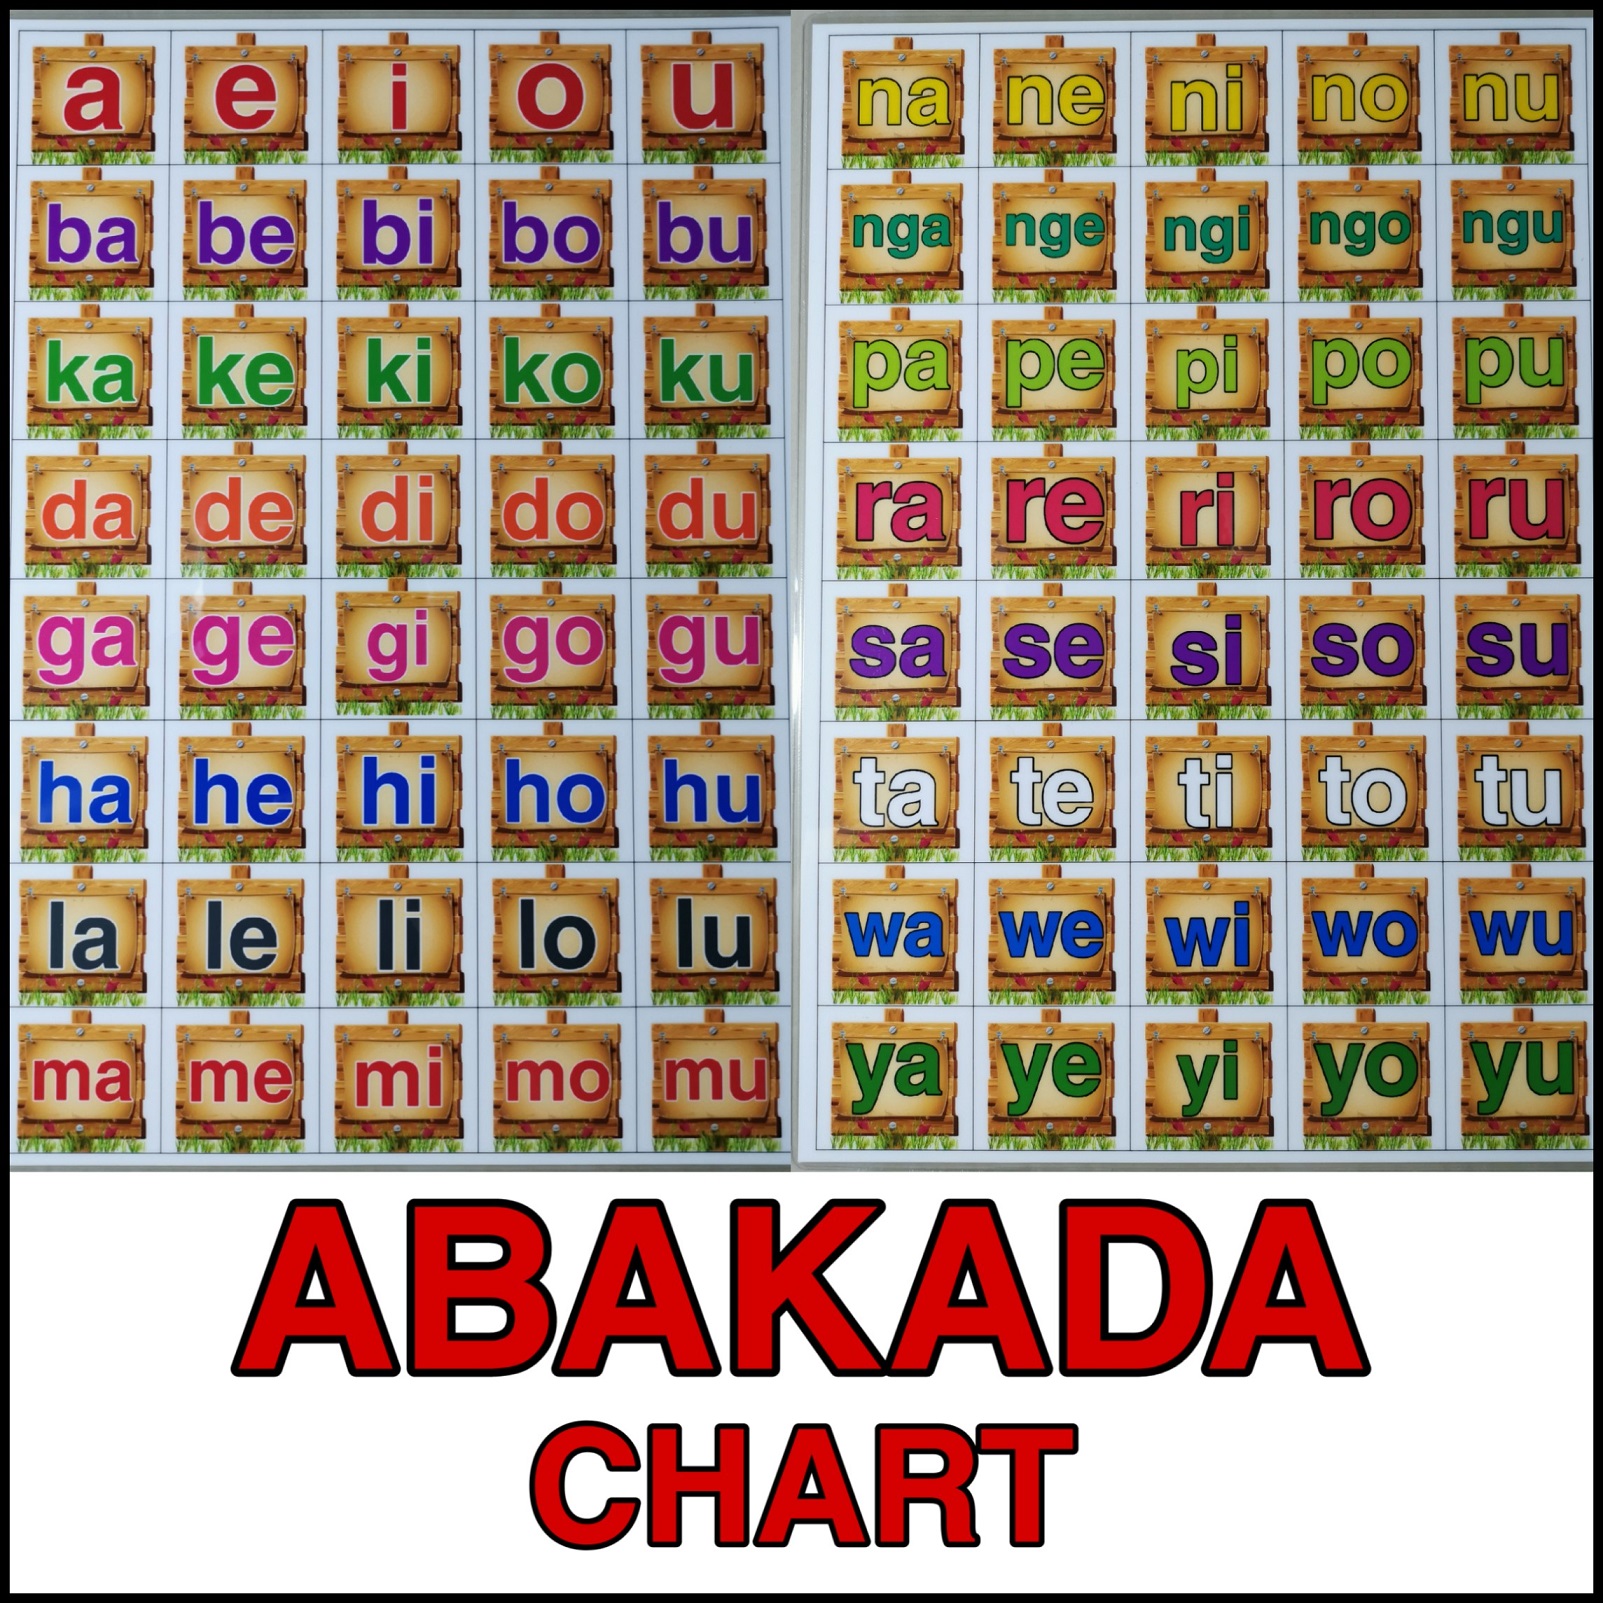 abakada abcd